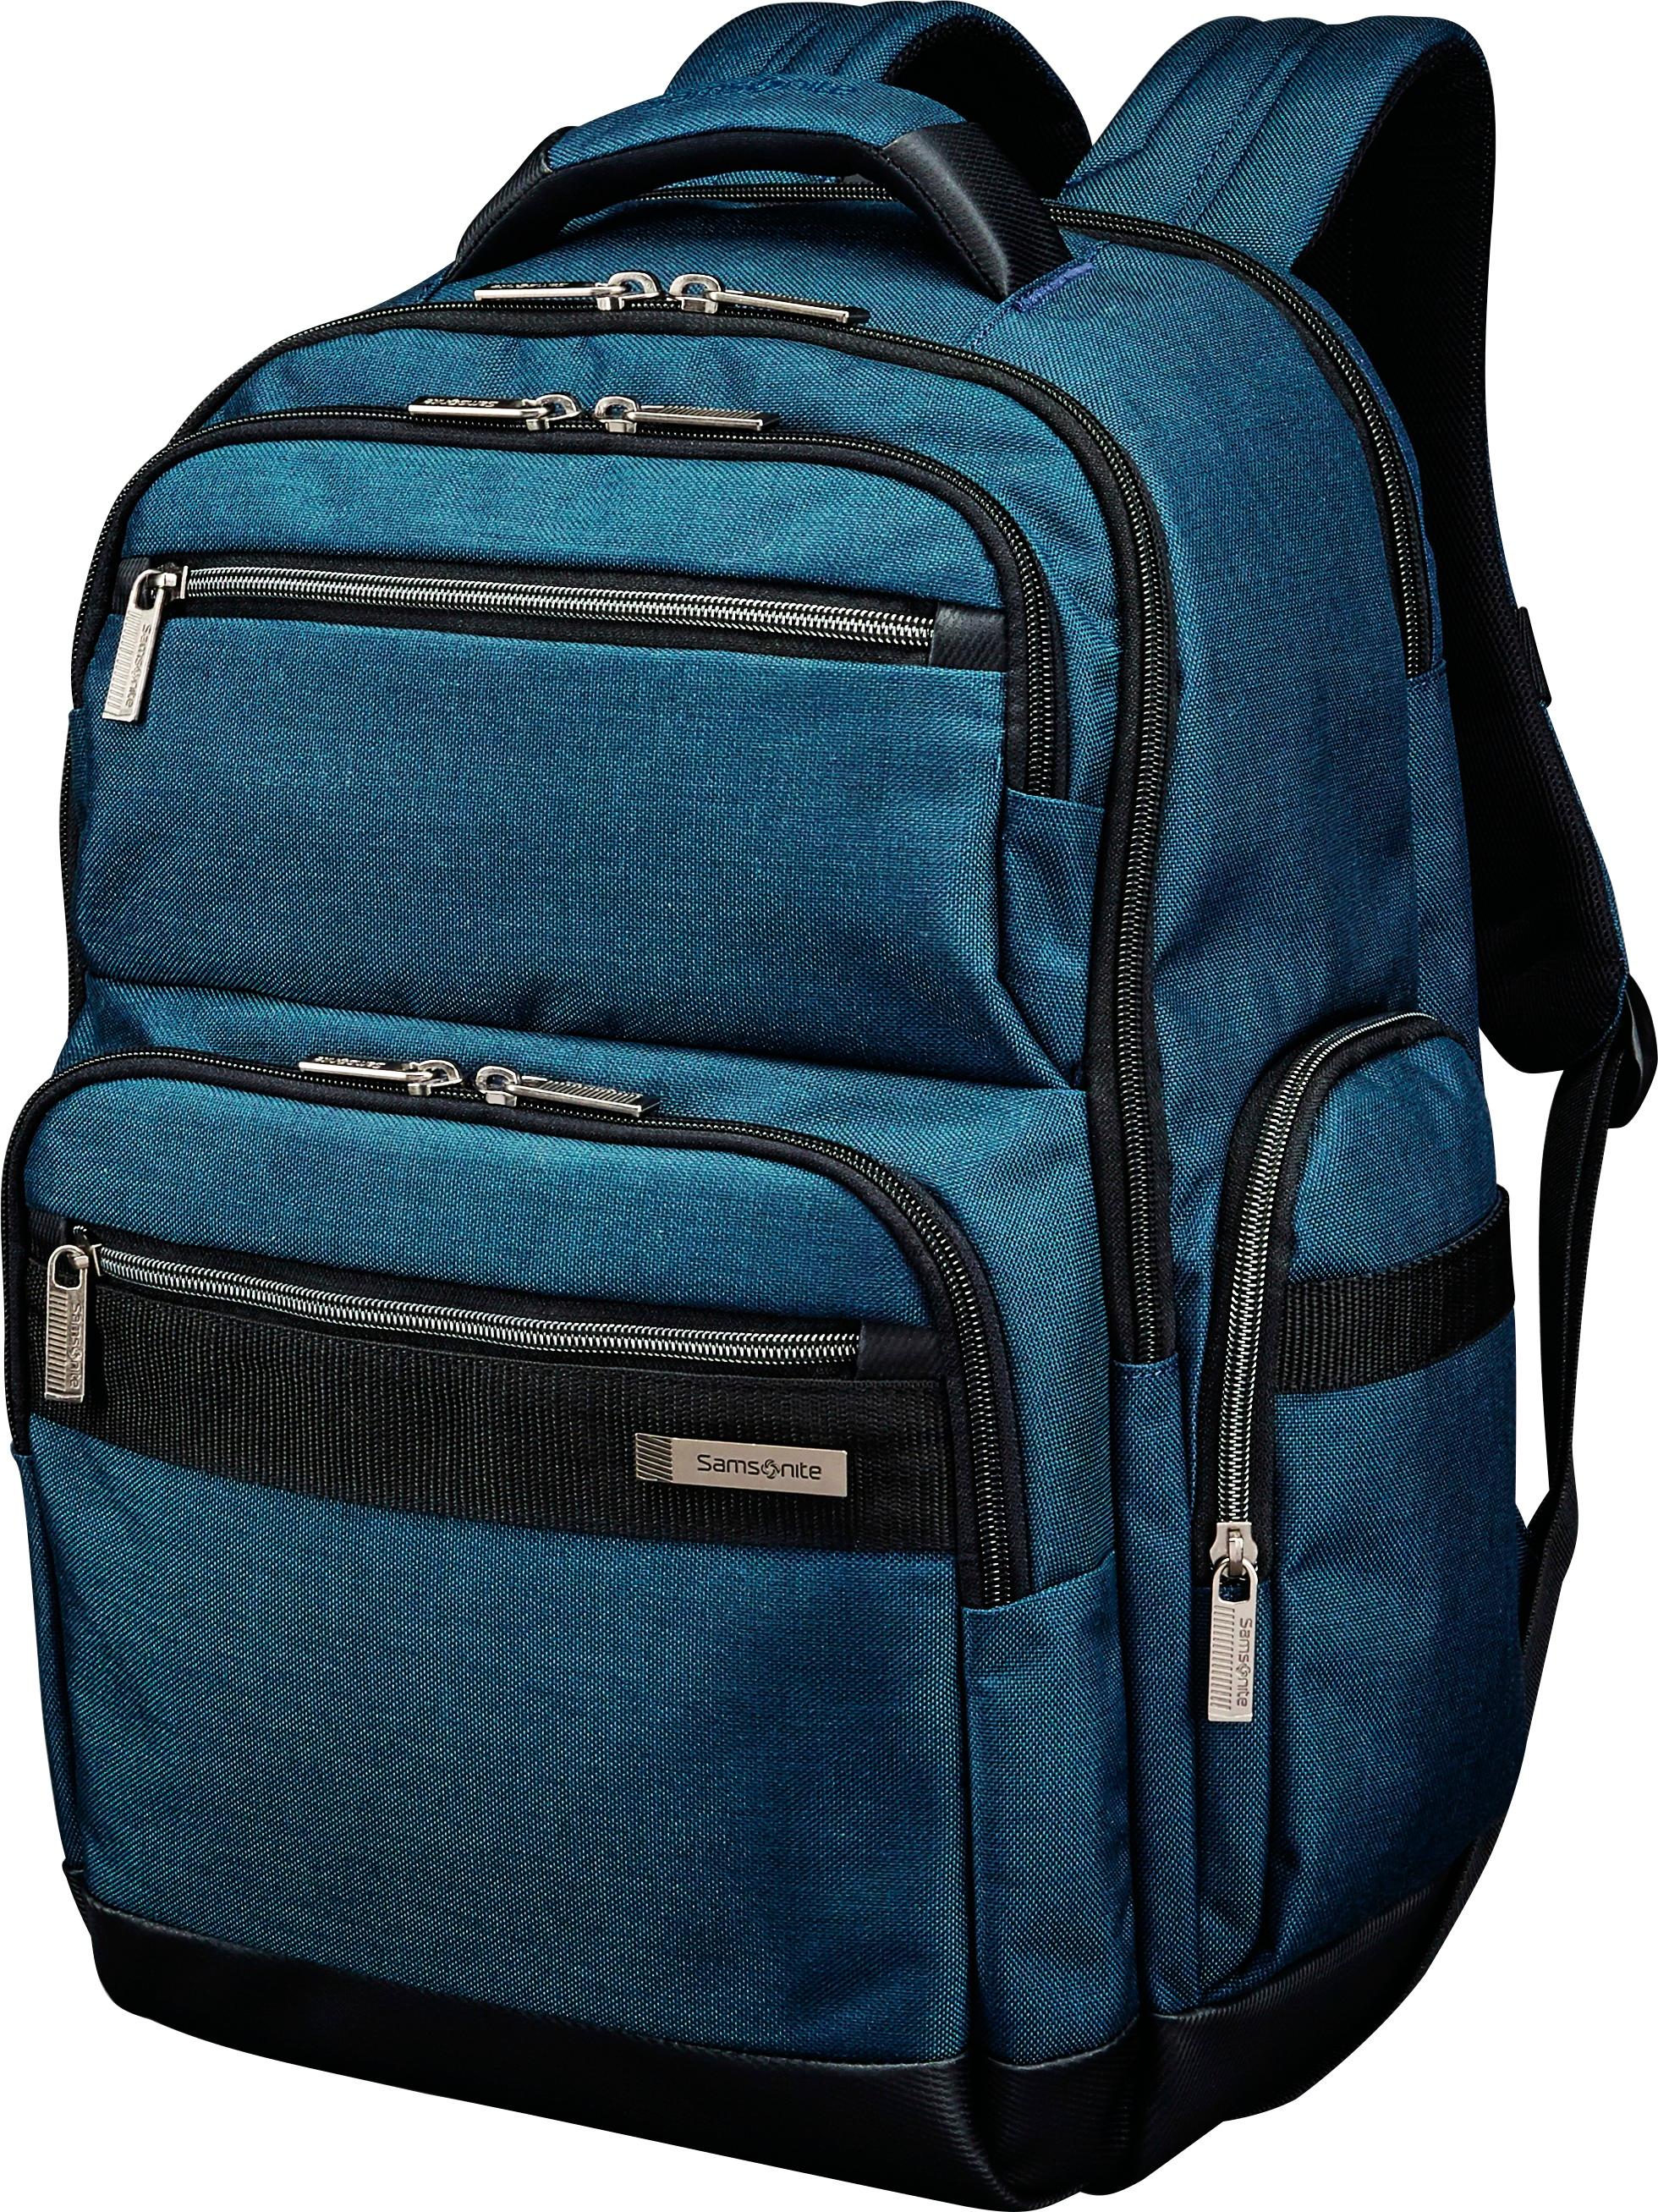 Samsonite Modern Utility GT Laptop Backpack Blue 88385-1599 - Best Buy